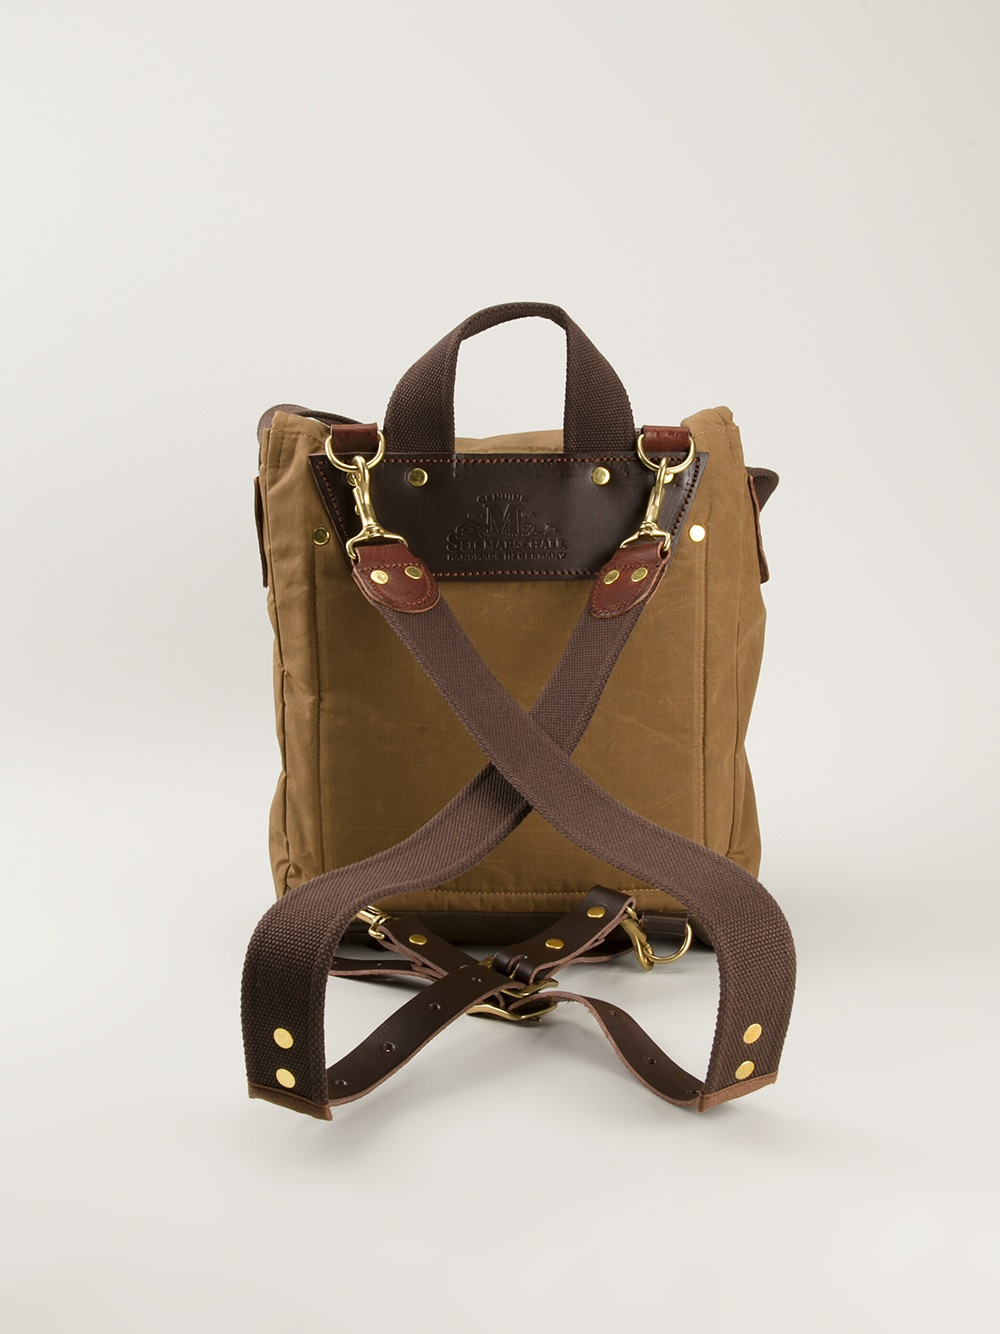 Lyst - Junya Watanabe Small Backpack in Brown for Men